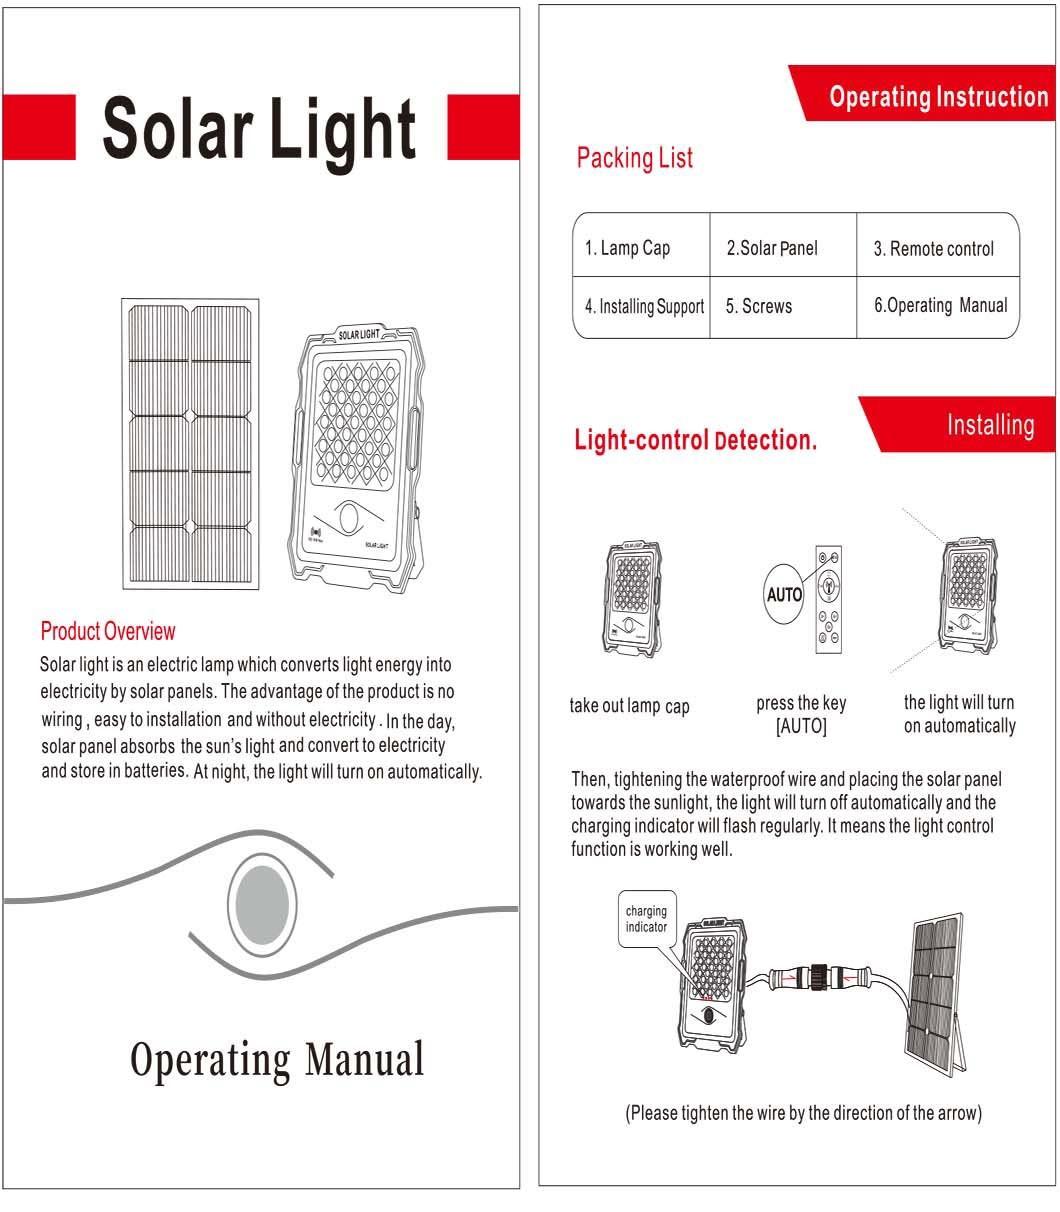 100W Solar Energy LED Lighting IP67 Flood Light with CCTV